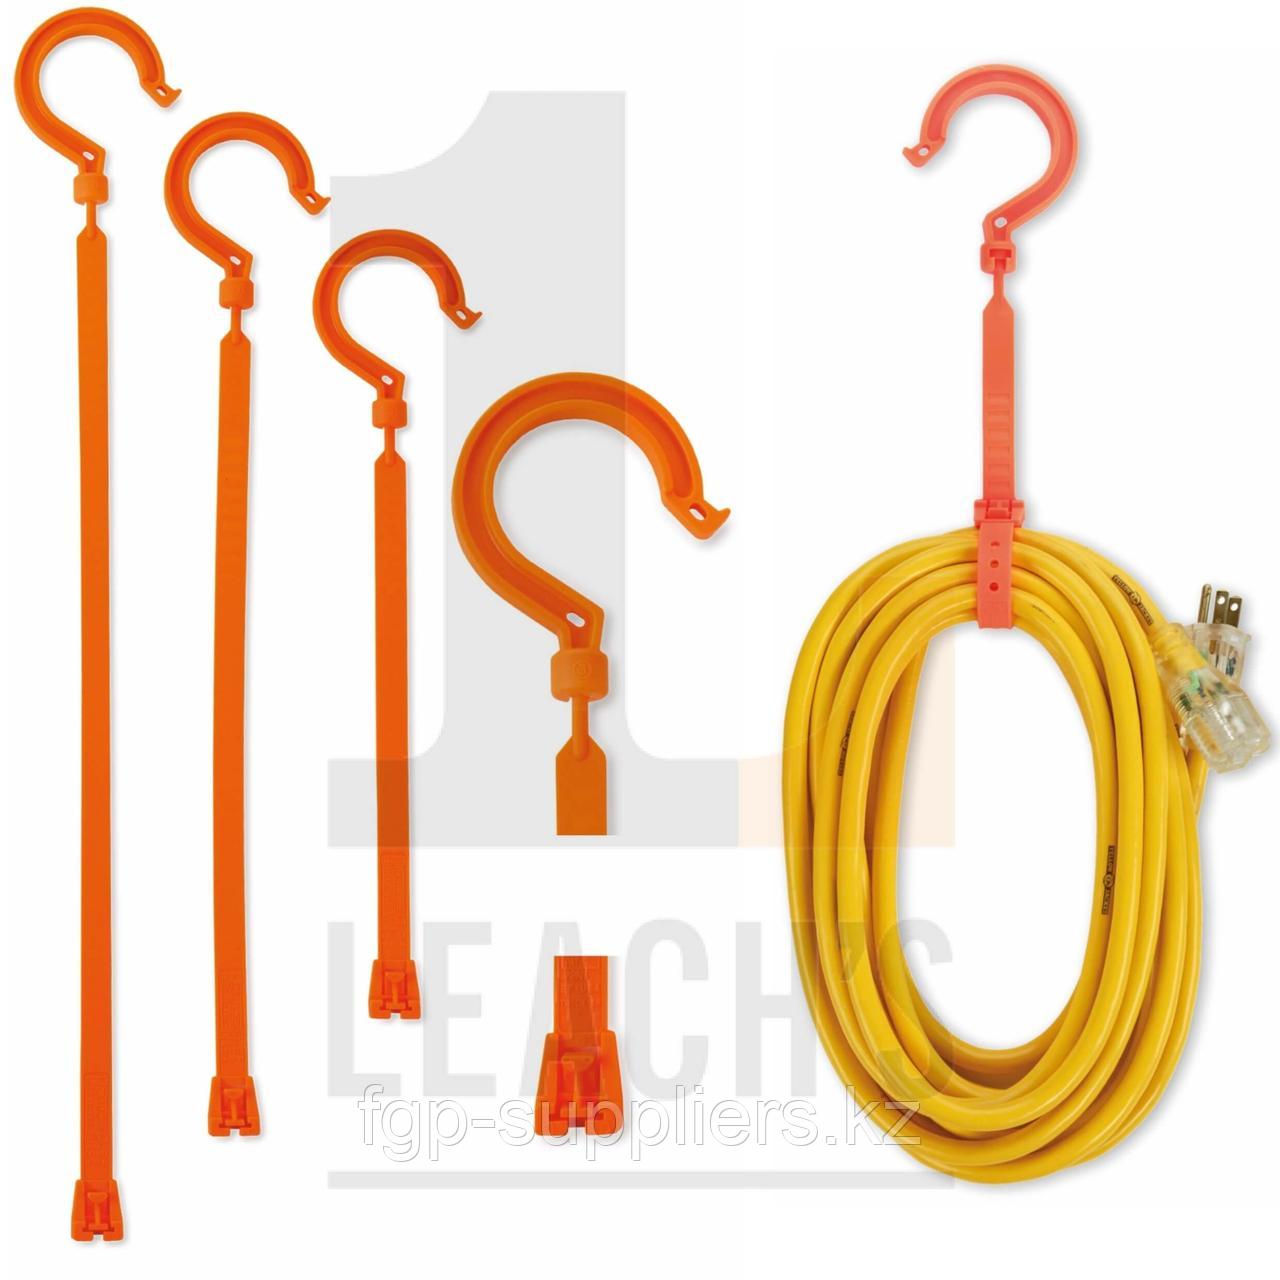 Re-Usable Tie Hook - Large Hook / Хомуток-крючок многоразового пользования - большой крюк